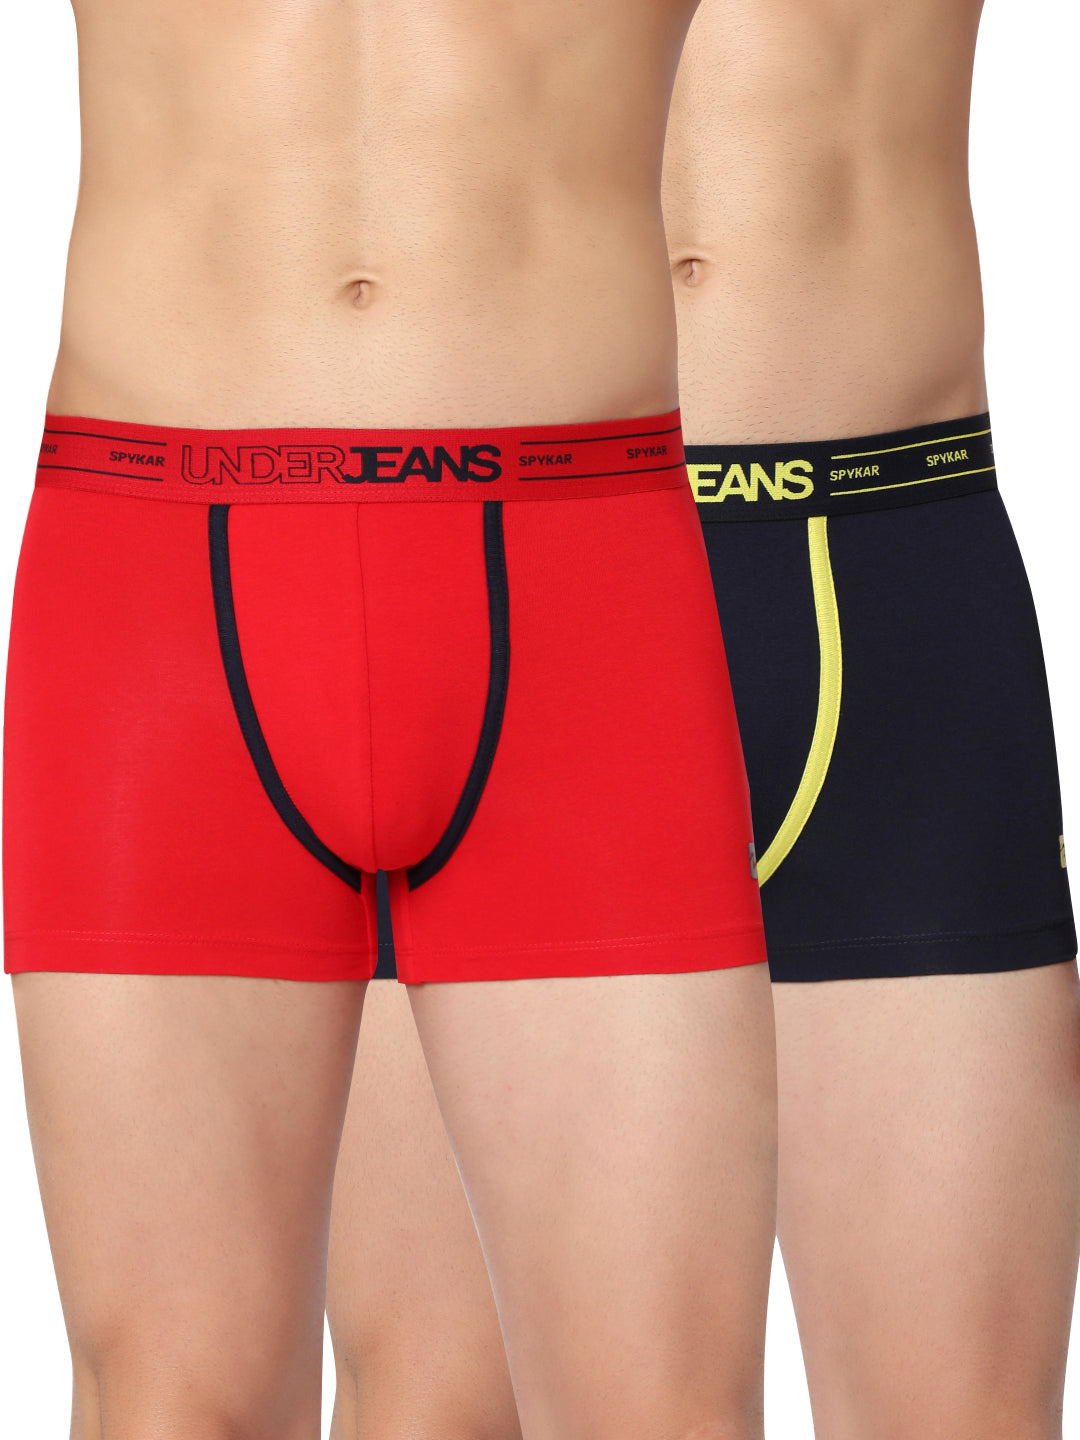 Men Premium Navy & Red Cotton Blend Trunk (Pack of 2)- UnderJeans by Spykar